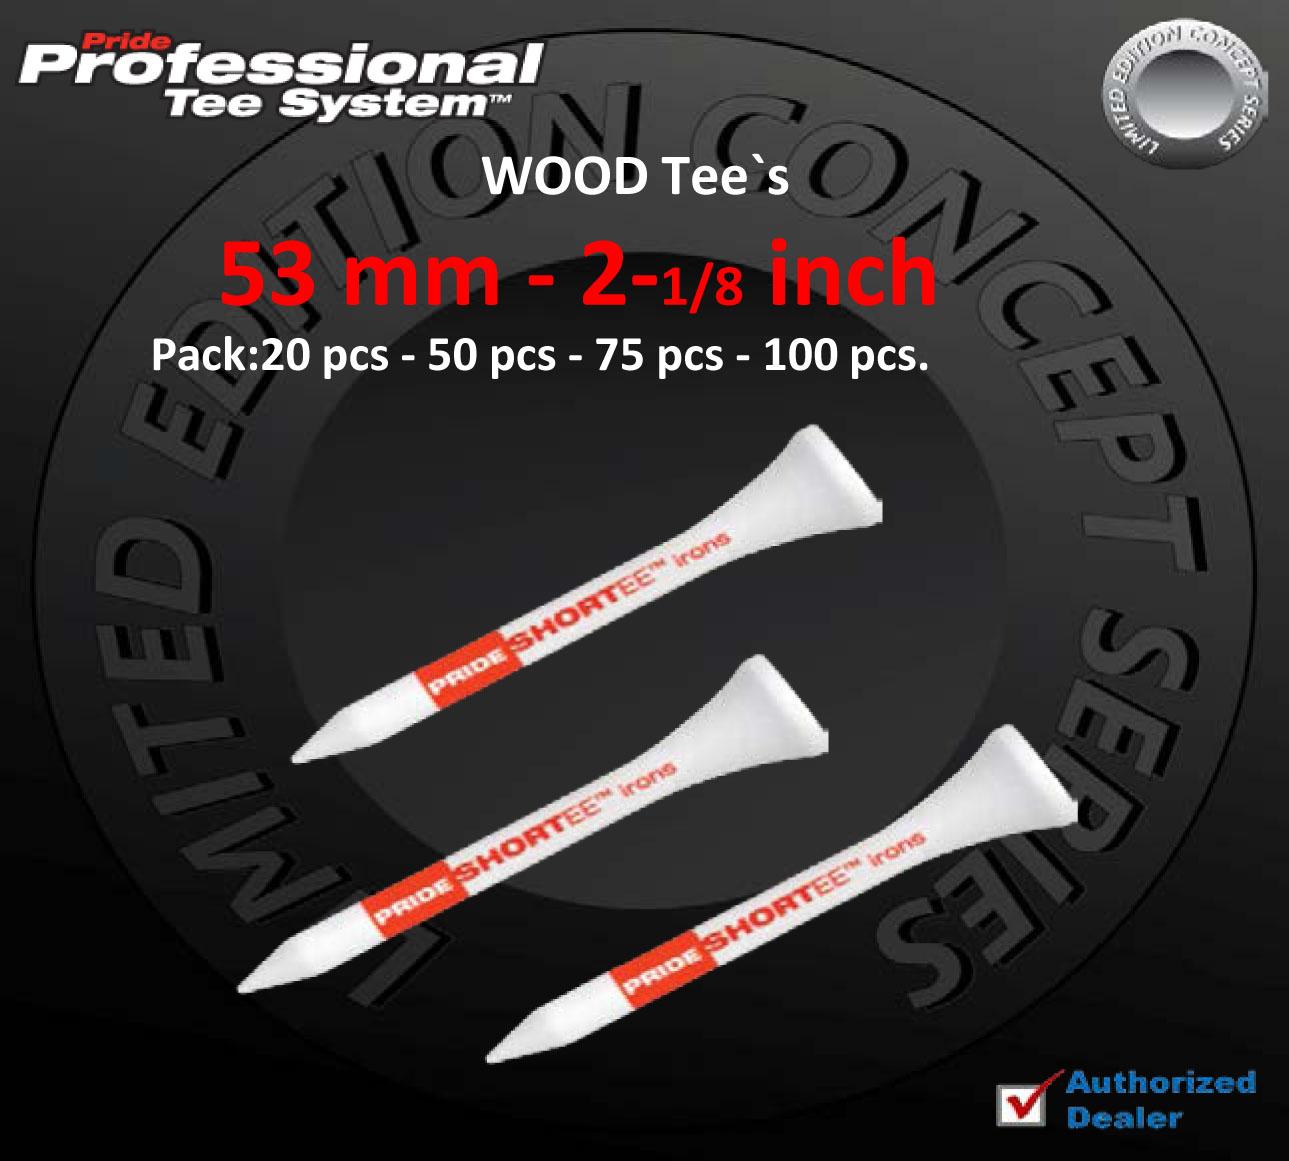 Golf Pride Professional PTS Wood Tee 53 mm - 2-1/8 inch ( Pack: 20-50-75-100 pcs )